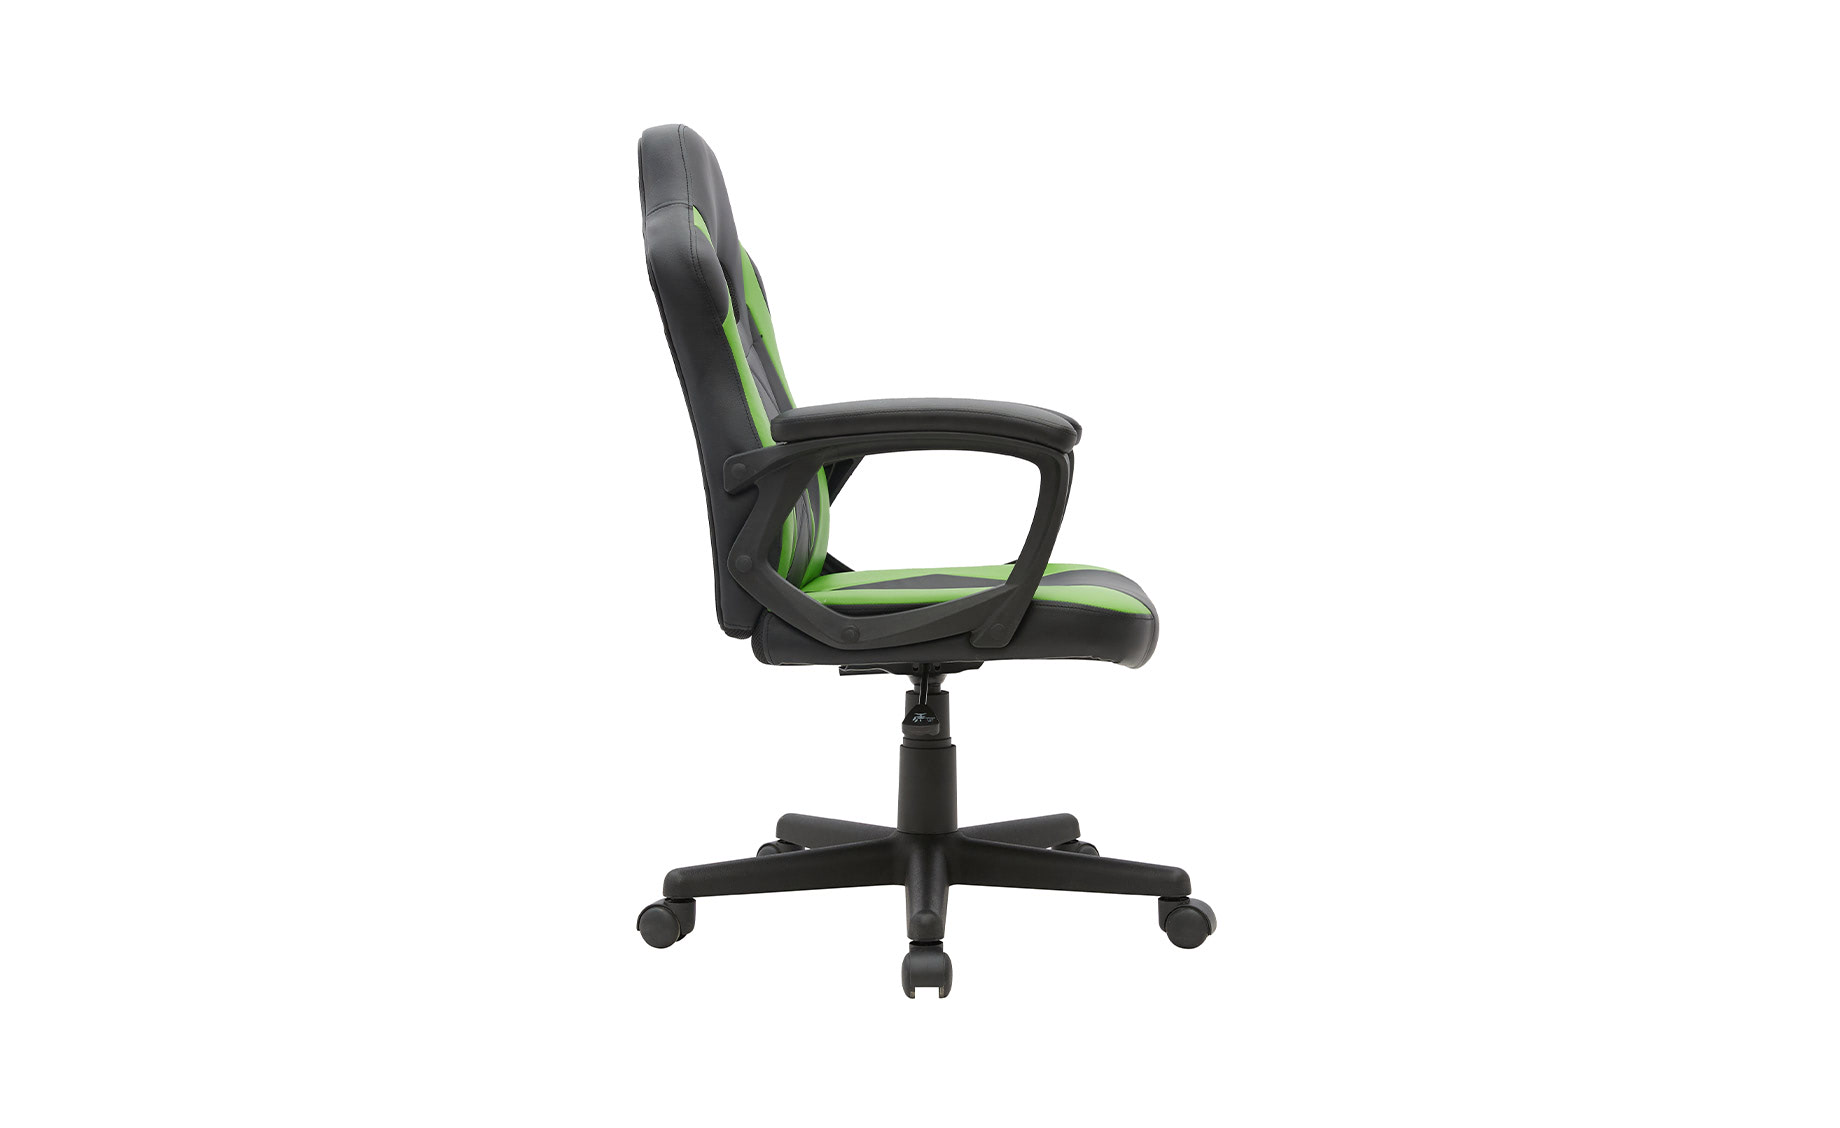 Dalton uredska fotelja 61x59x97-109cm crno/zelena